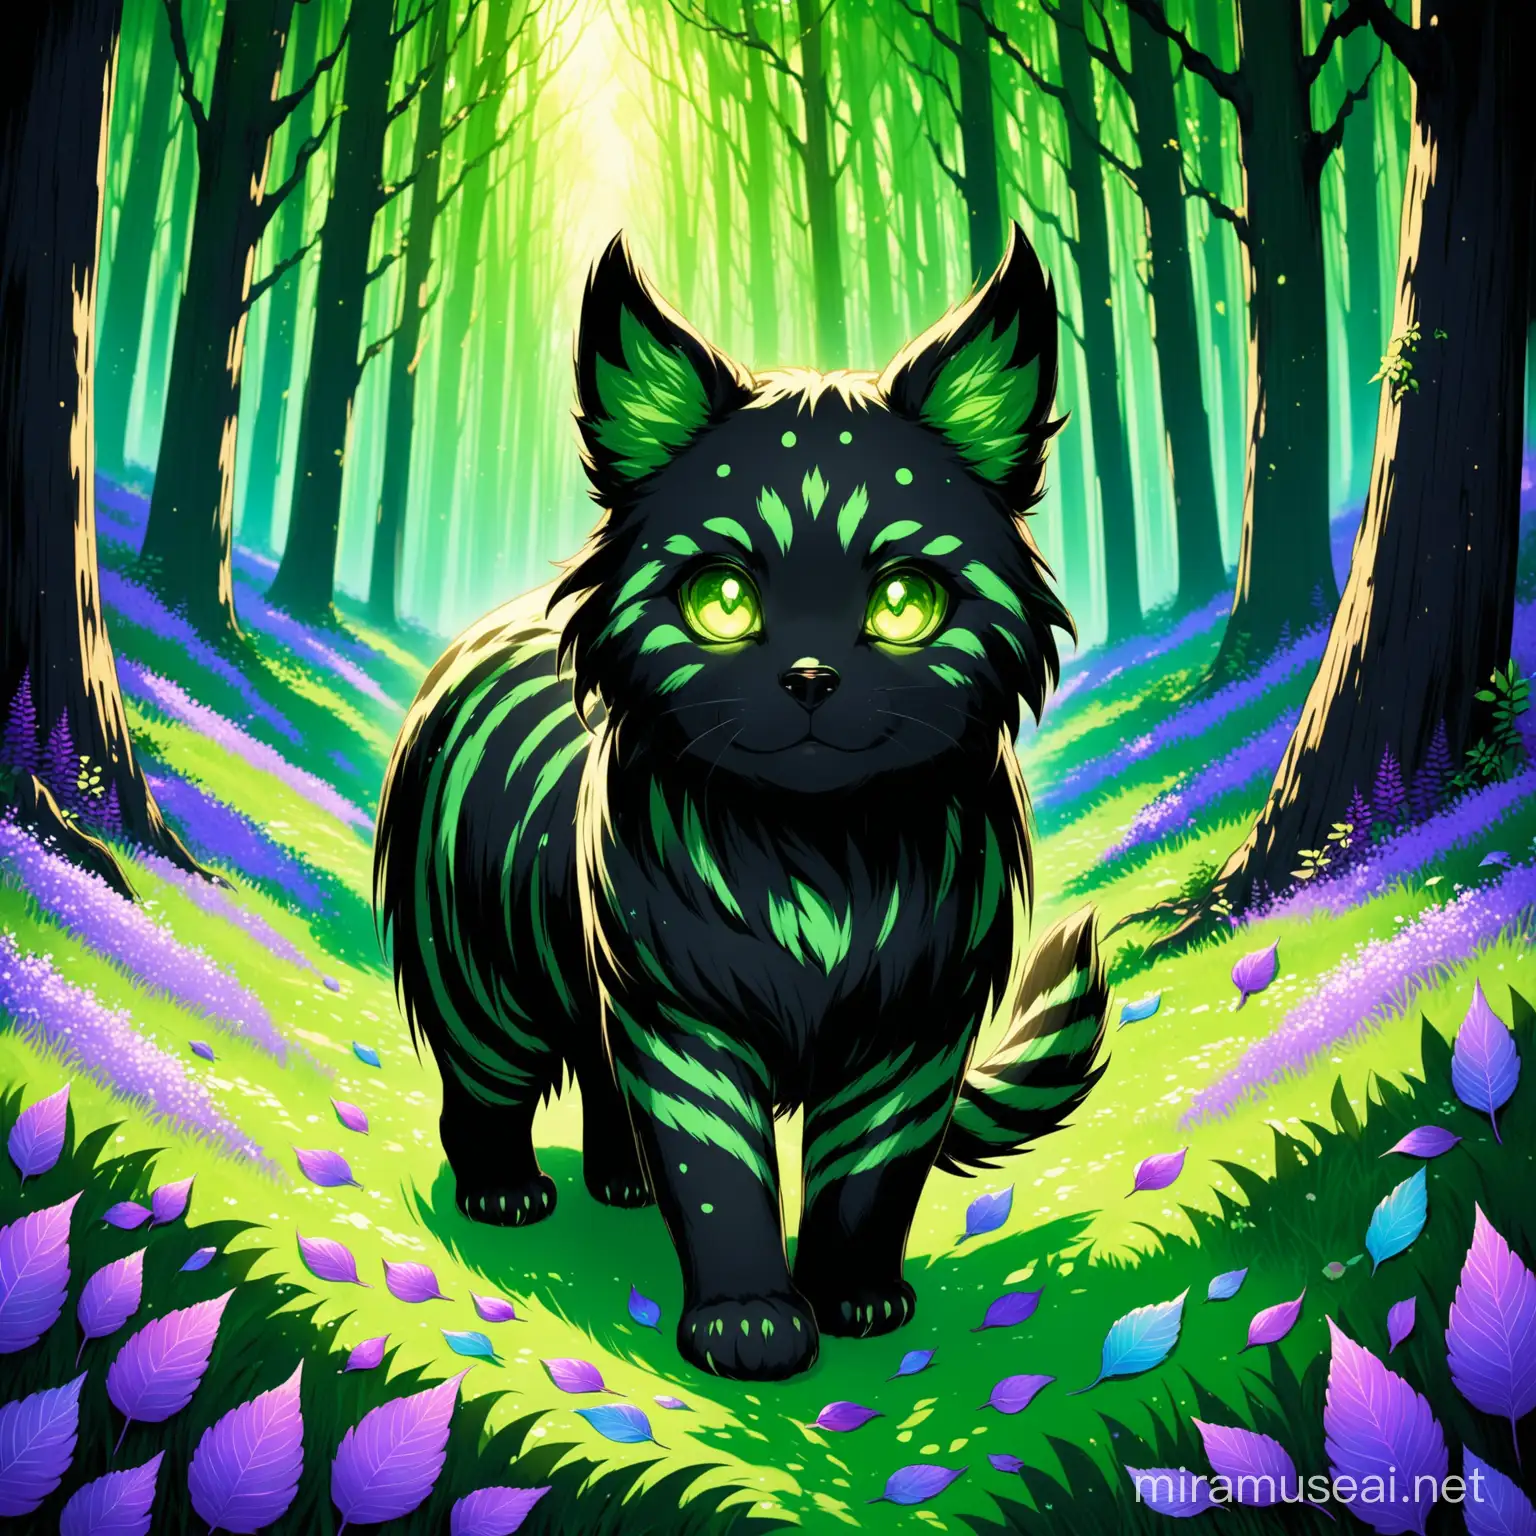 Mystical Feline Amidst Verdant Forest Shadows